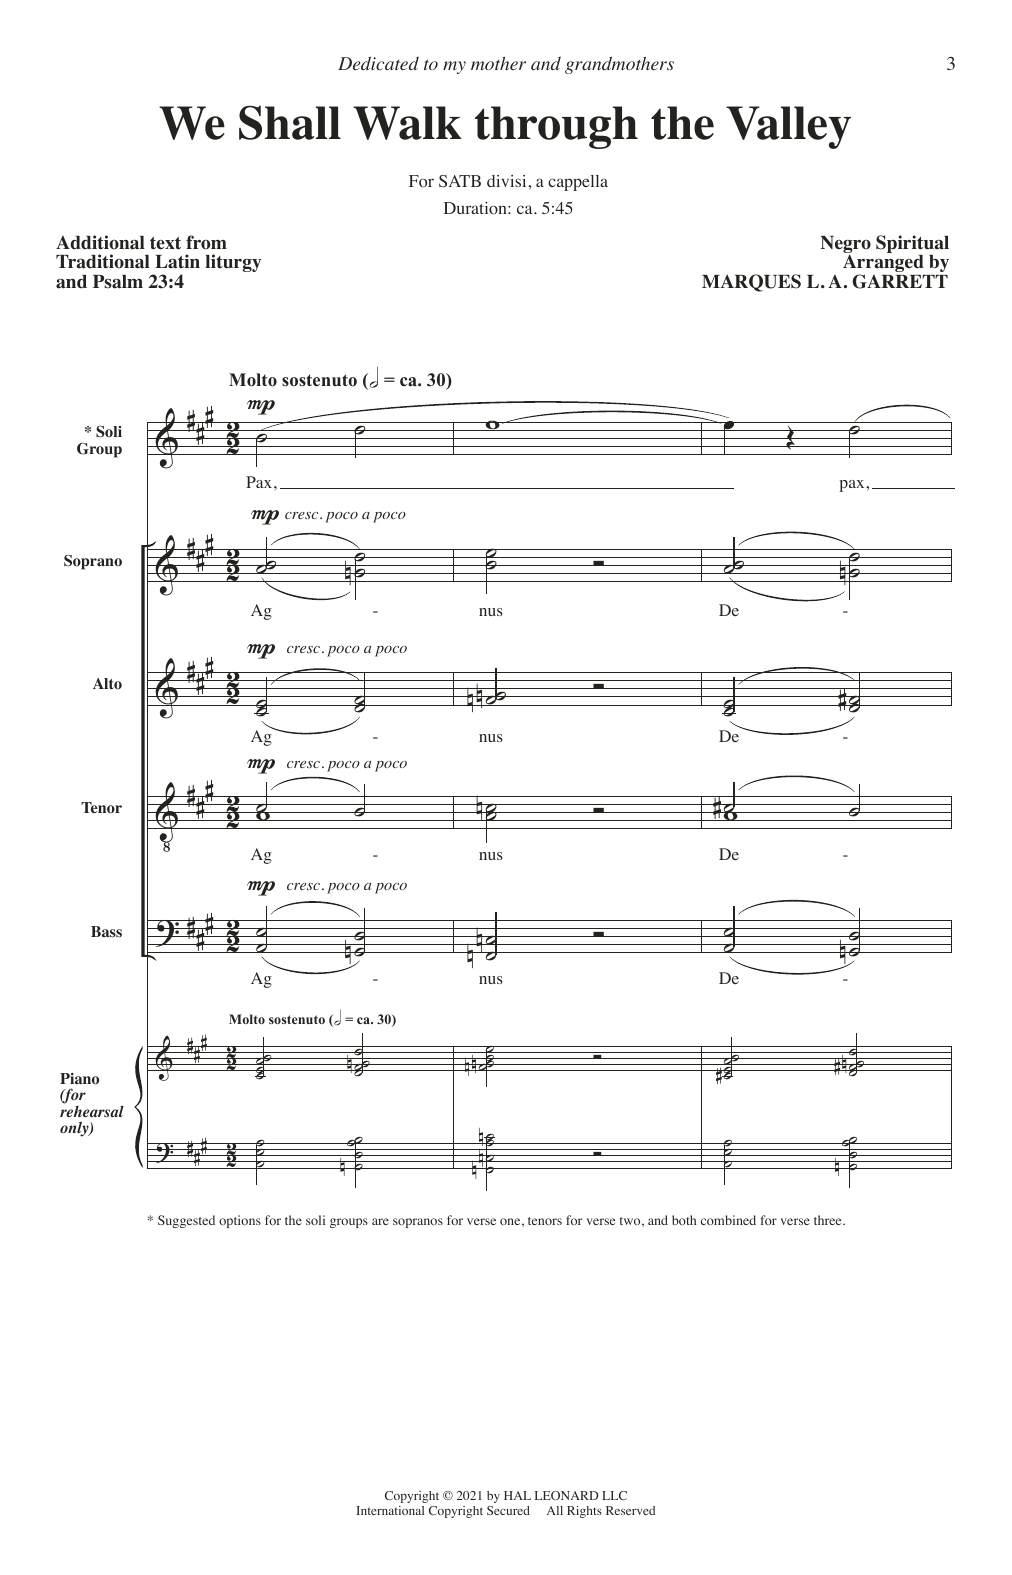 Marques L.A. Garrett We Shall Walk Through The Valley Sheet Music Notes & Chords for SATB Choir - Download or Print PDF